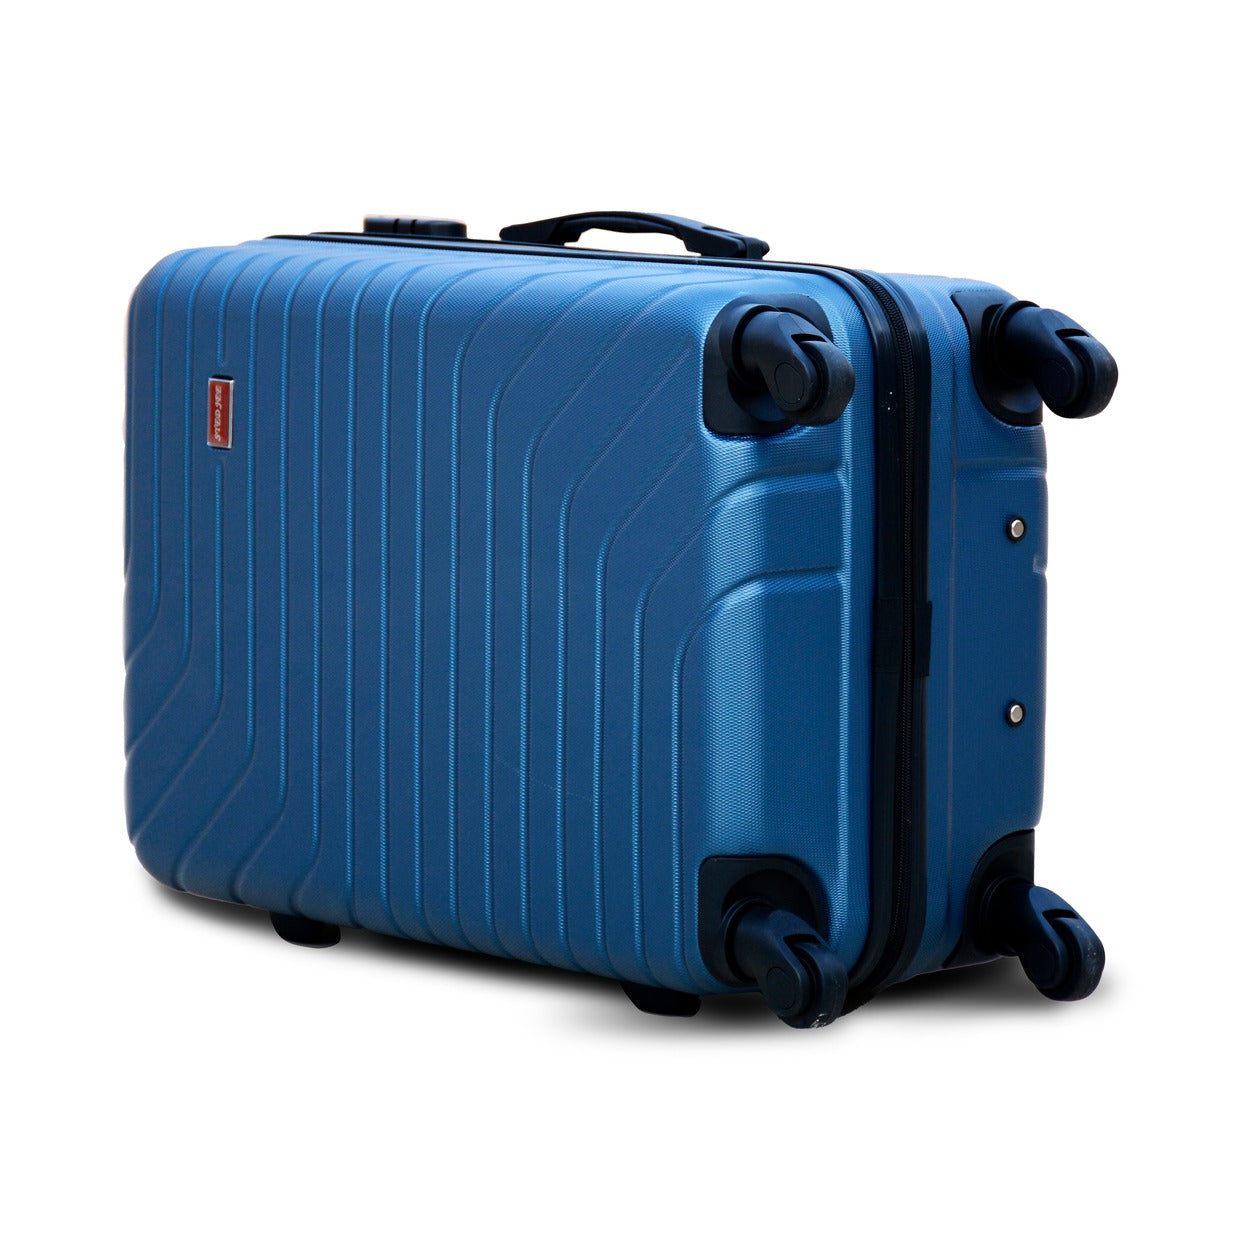 20" Blue Colour SJ ABS Luggage Lightweight Hard Case Trolley Bag | 2 Year Warranty